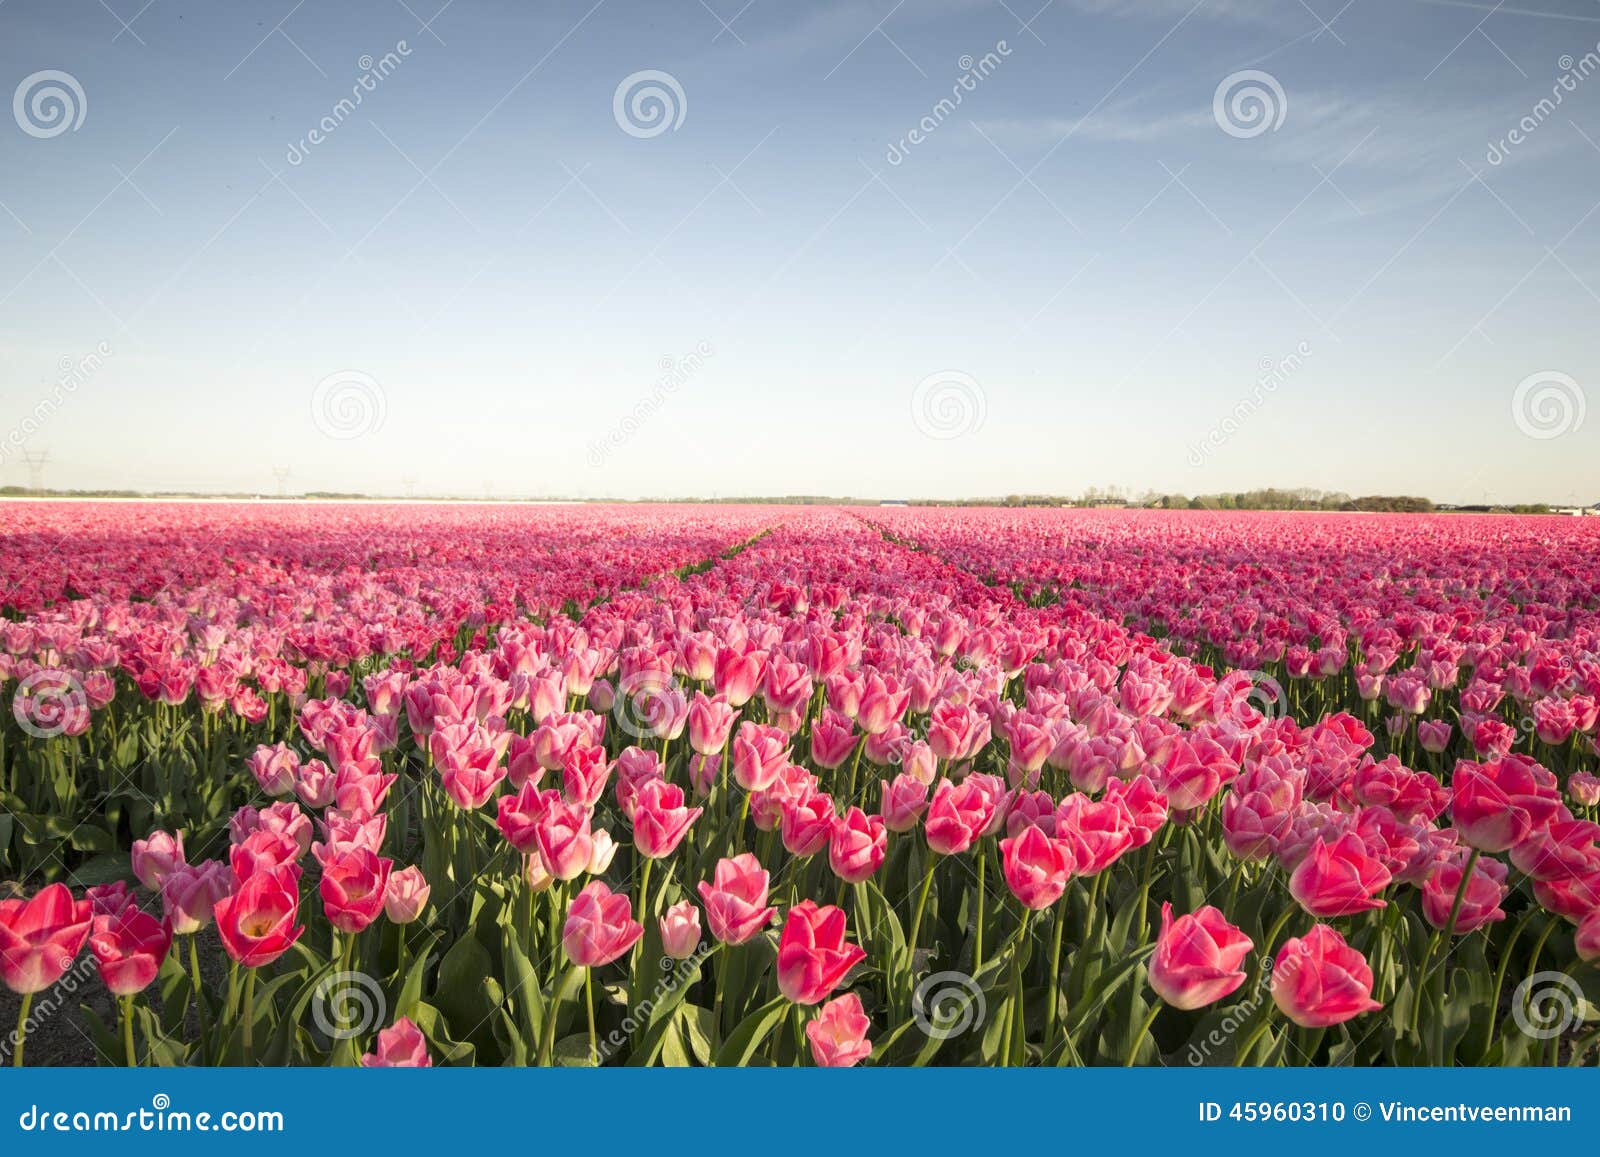 pink tulip field ii